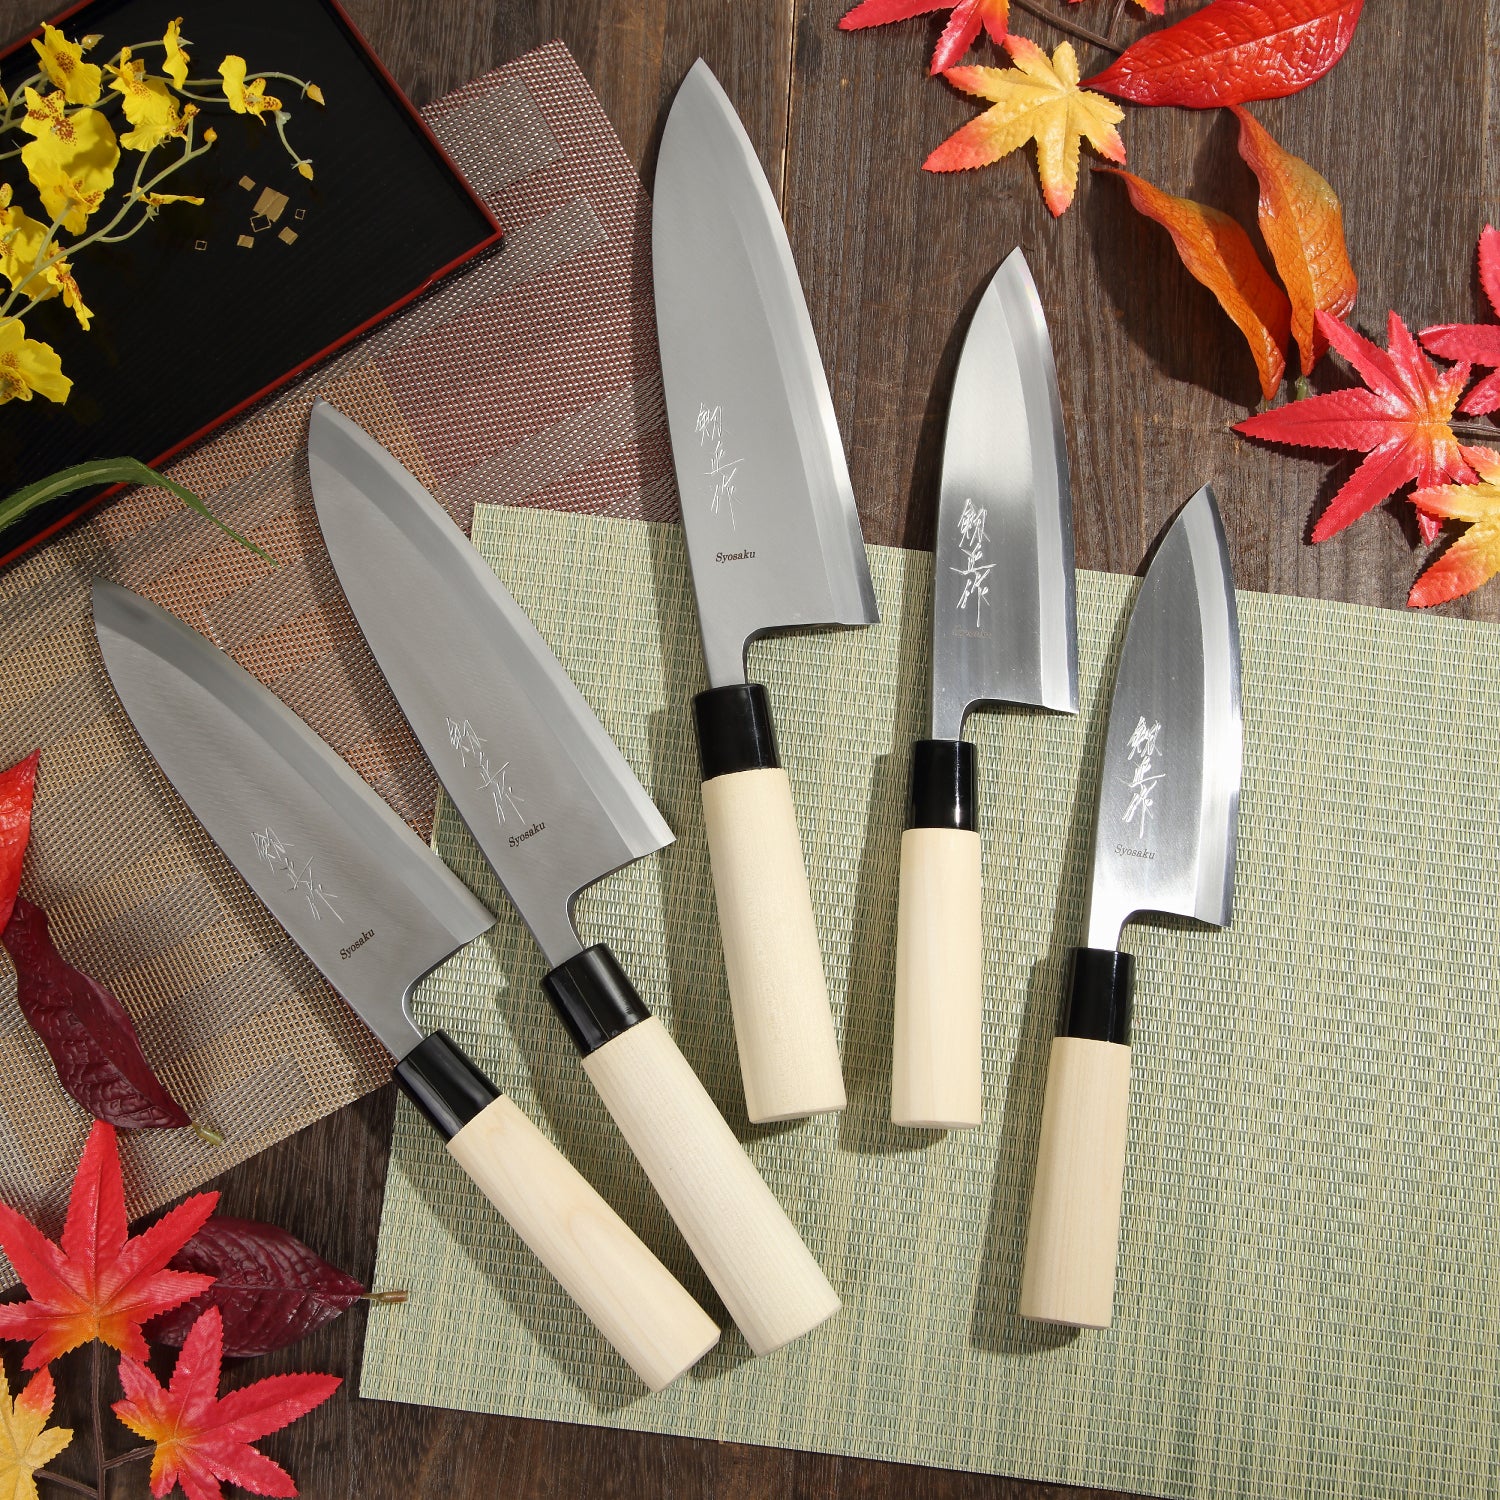 Syosaku Japanese Sushi Fillet Best Sharp Kitchen Chef Knife Kigami(Yellow Steel)-No.2 D-Shape Magnolia Wood Handle, Deba 7-inch (180mm) - Syosaku-Japan